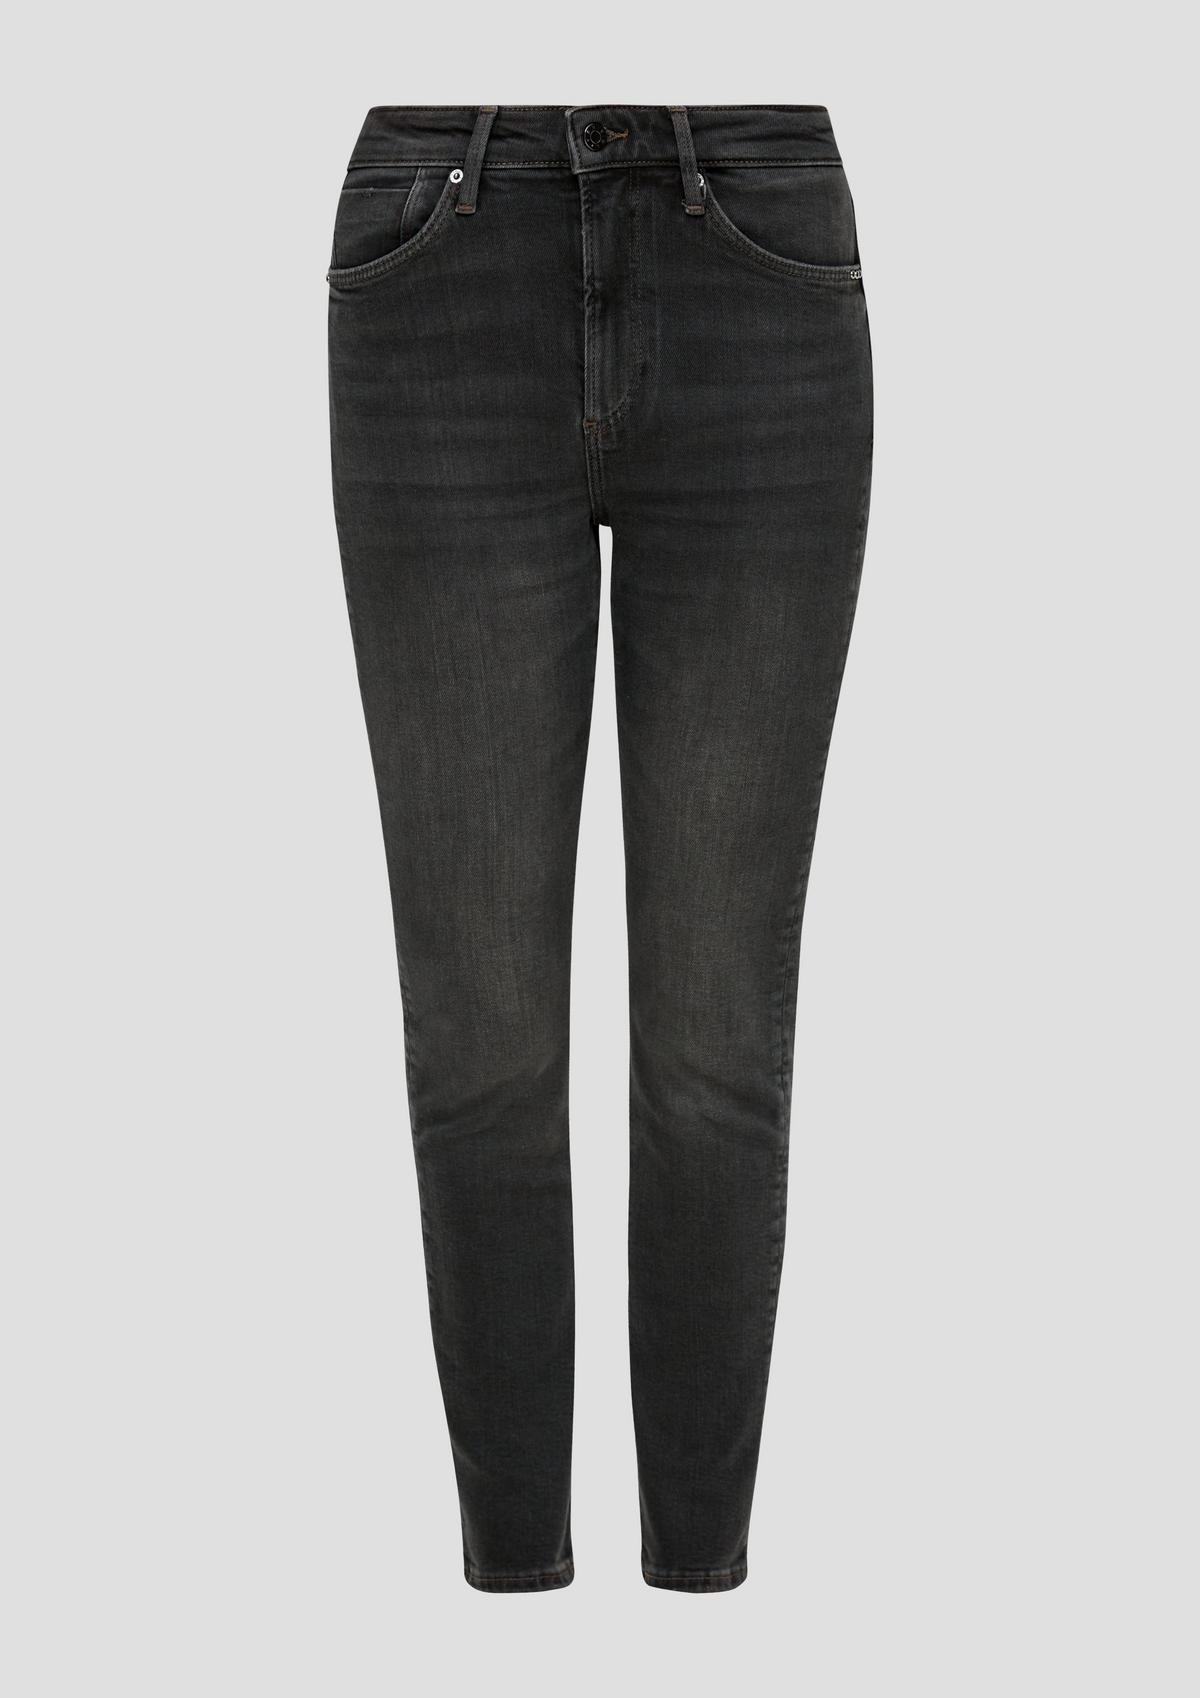 s.Oliver Izabell jeans / skinny fit / high rise / skinny leg